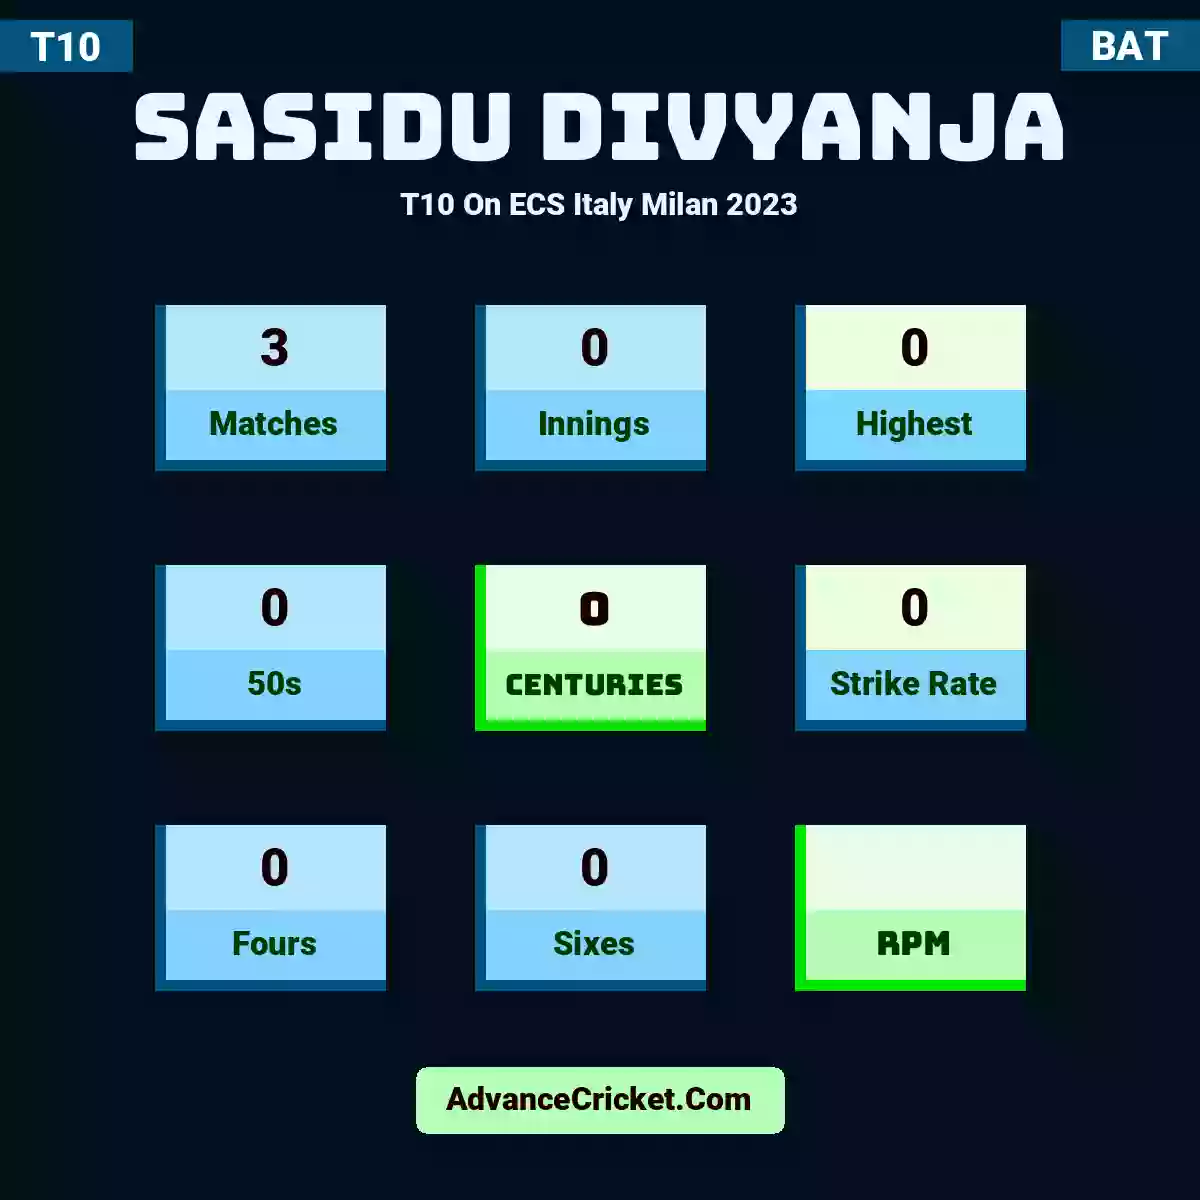 Sasidu Divyanja T10  On ECS Italy Milan 2023, Sasidu Divyanja played 3 matches, scored 0 runs as highest, 0 half-centuries, and 0 centuries, with a strike rate of 0. S.Divyanja hit 0 fours and 0 sixes.